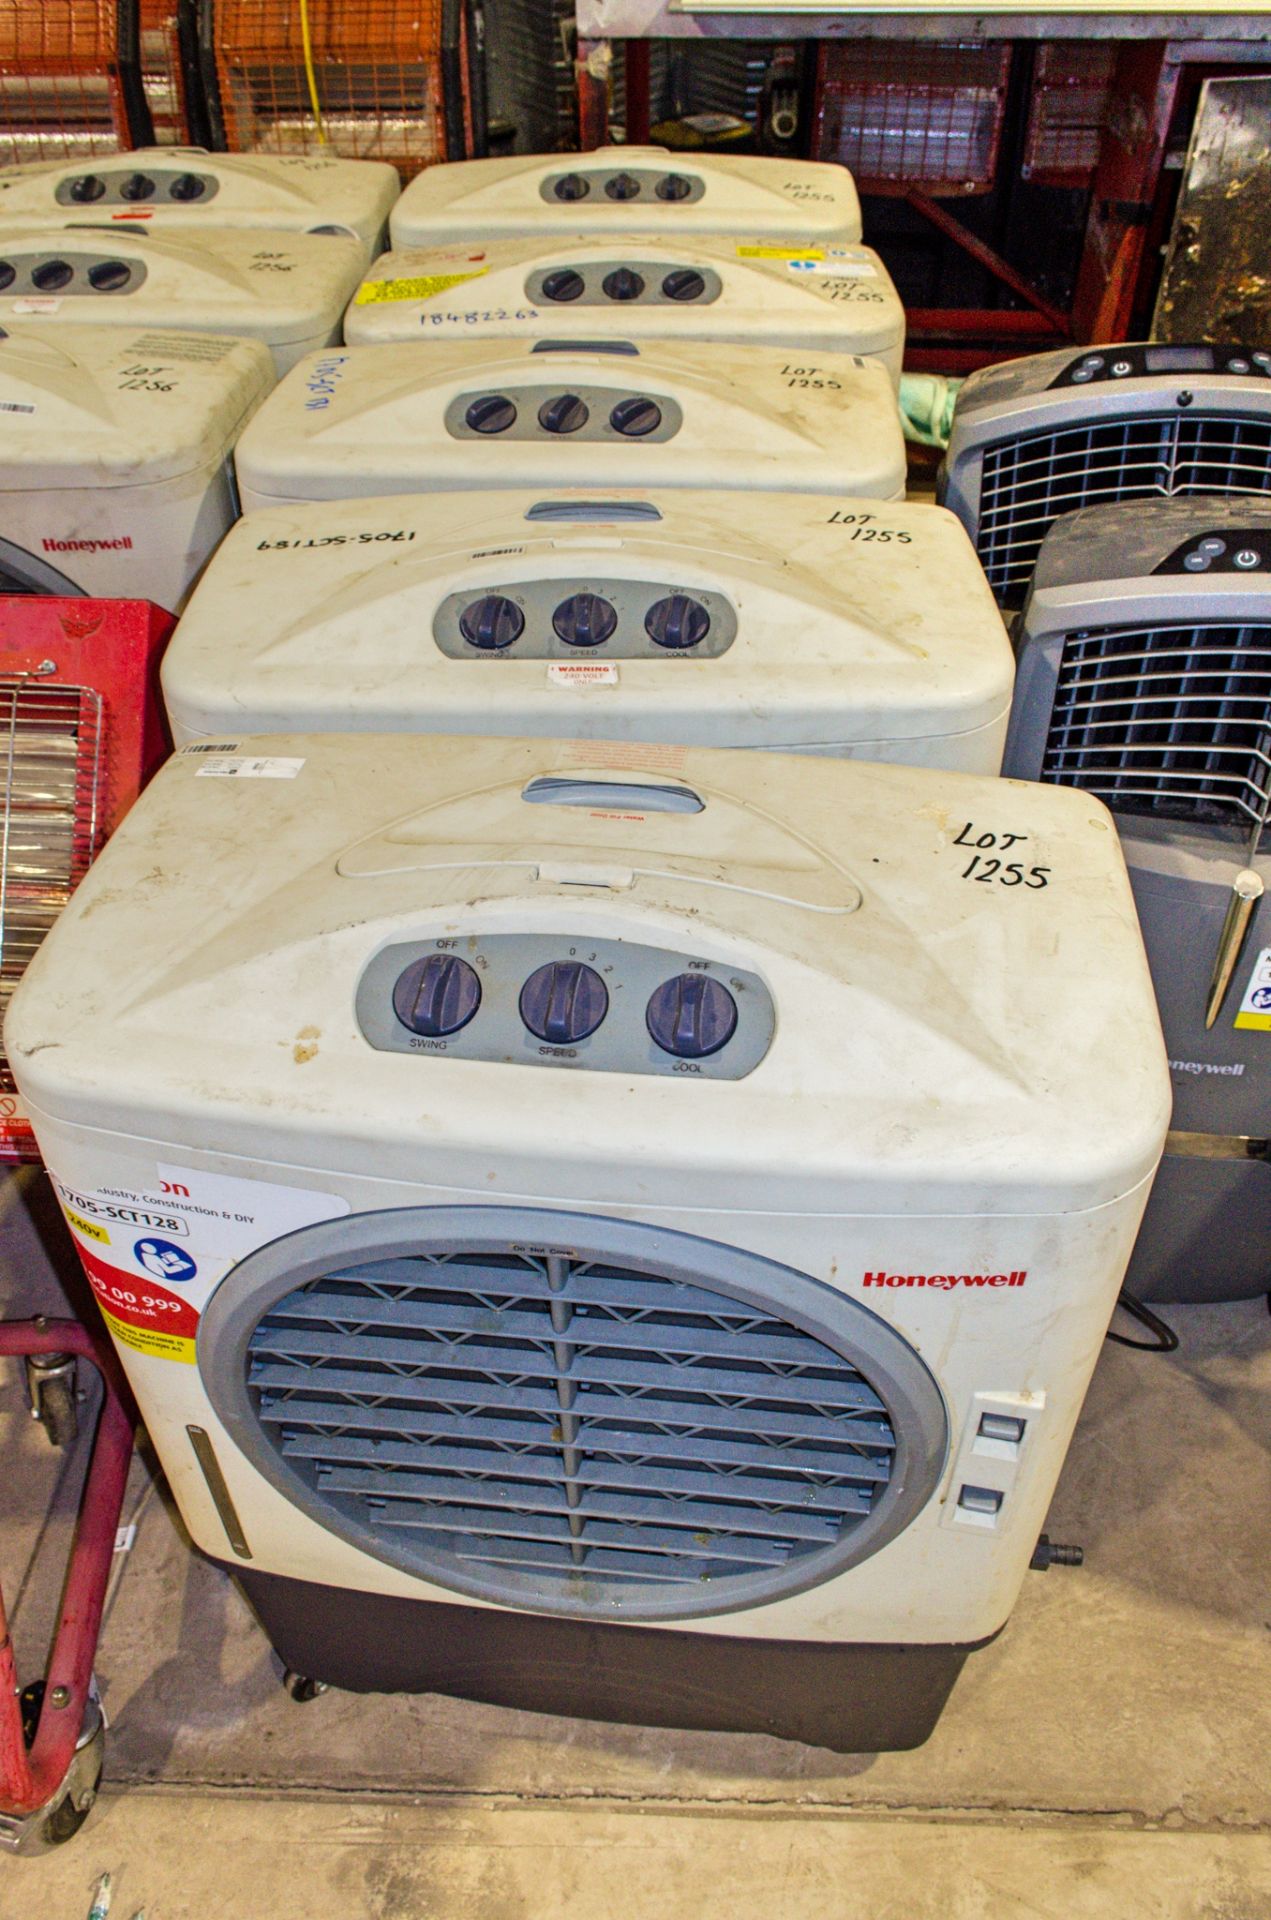 5 - Honeywell 240v air conditioning units